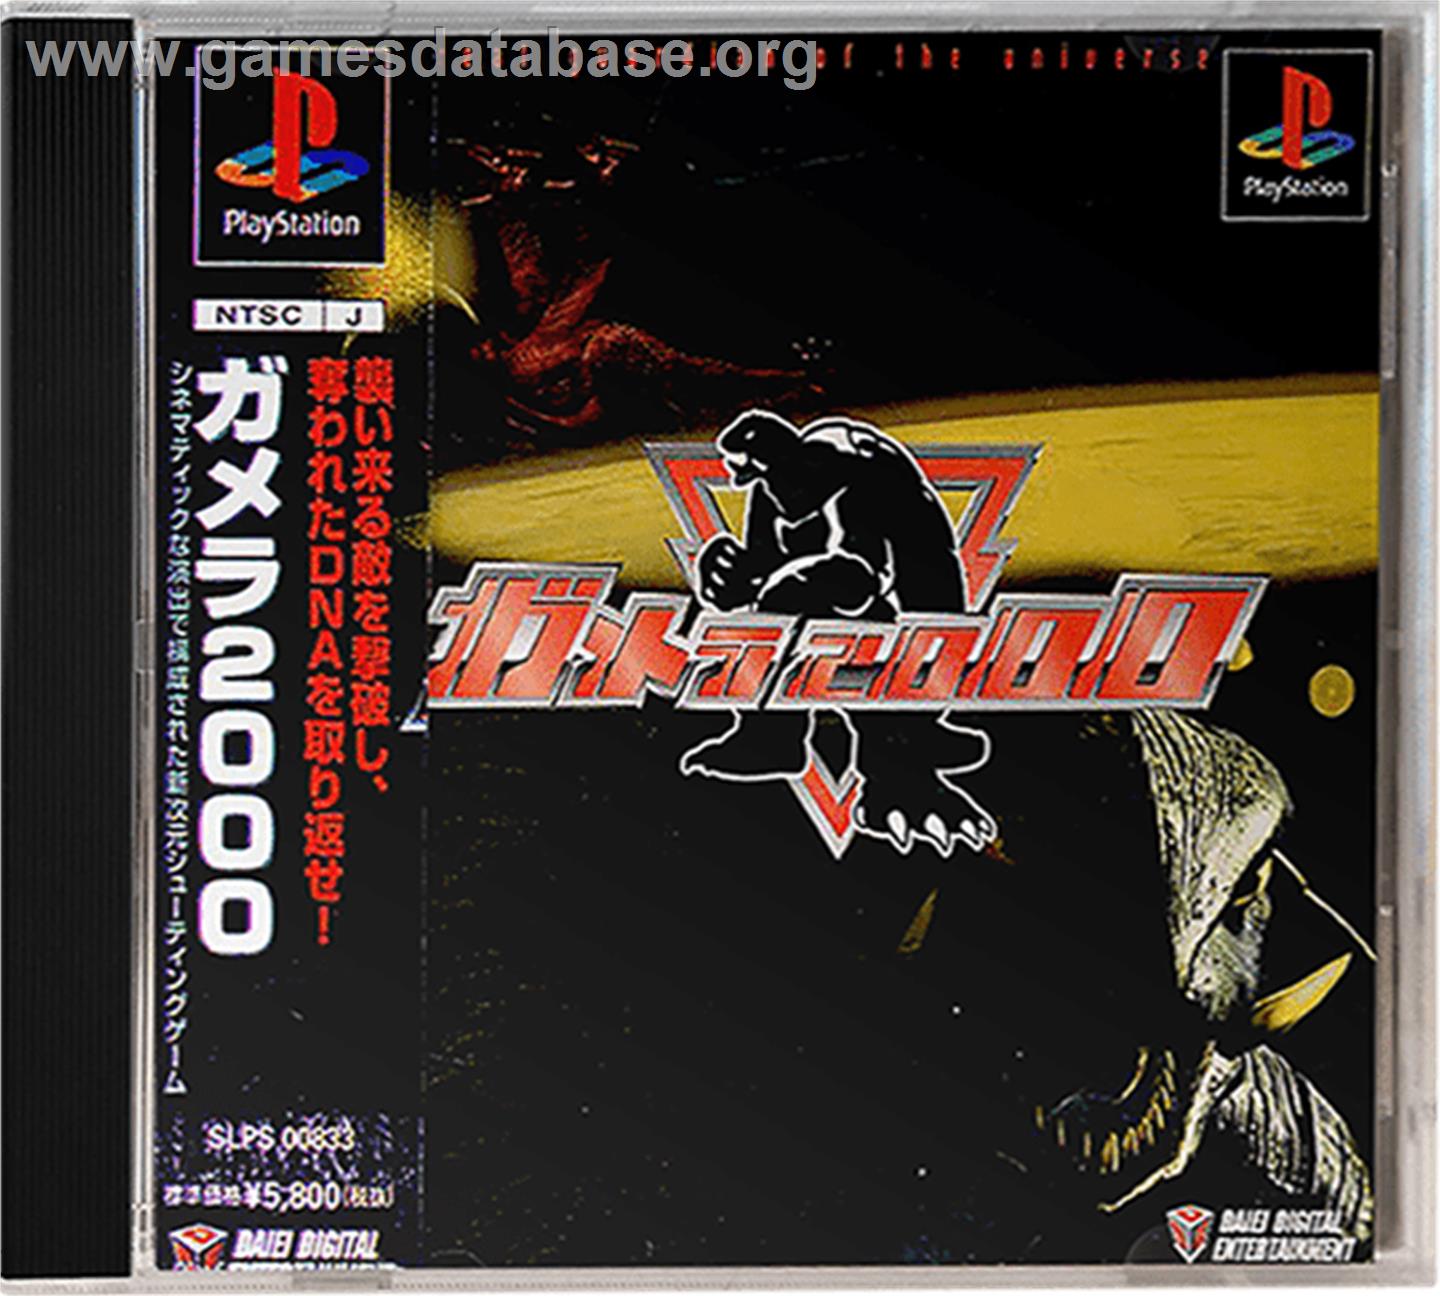 Gamera 2000 - Sony Playstation - Artwork - Box